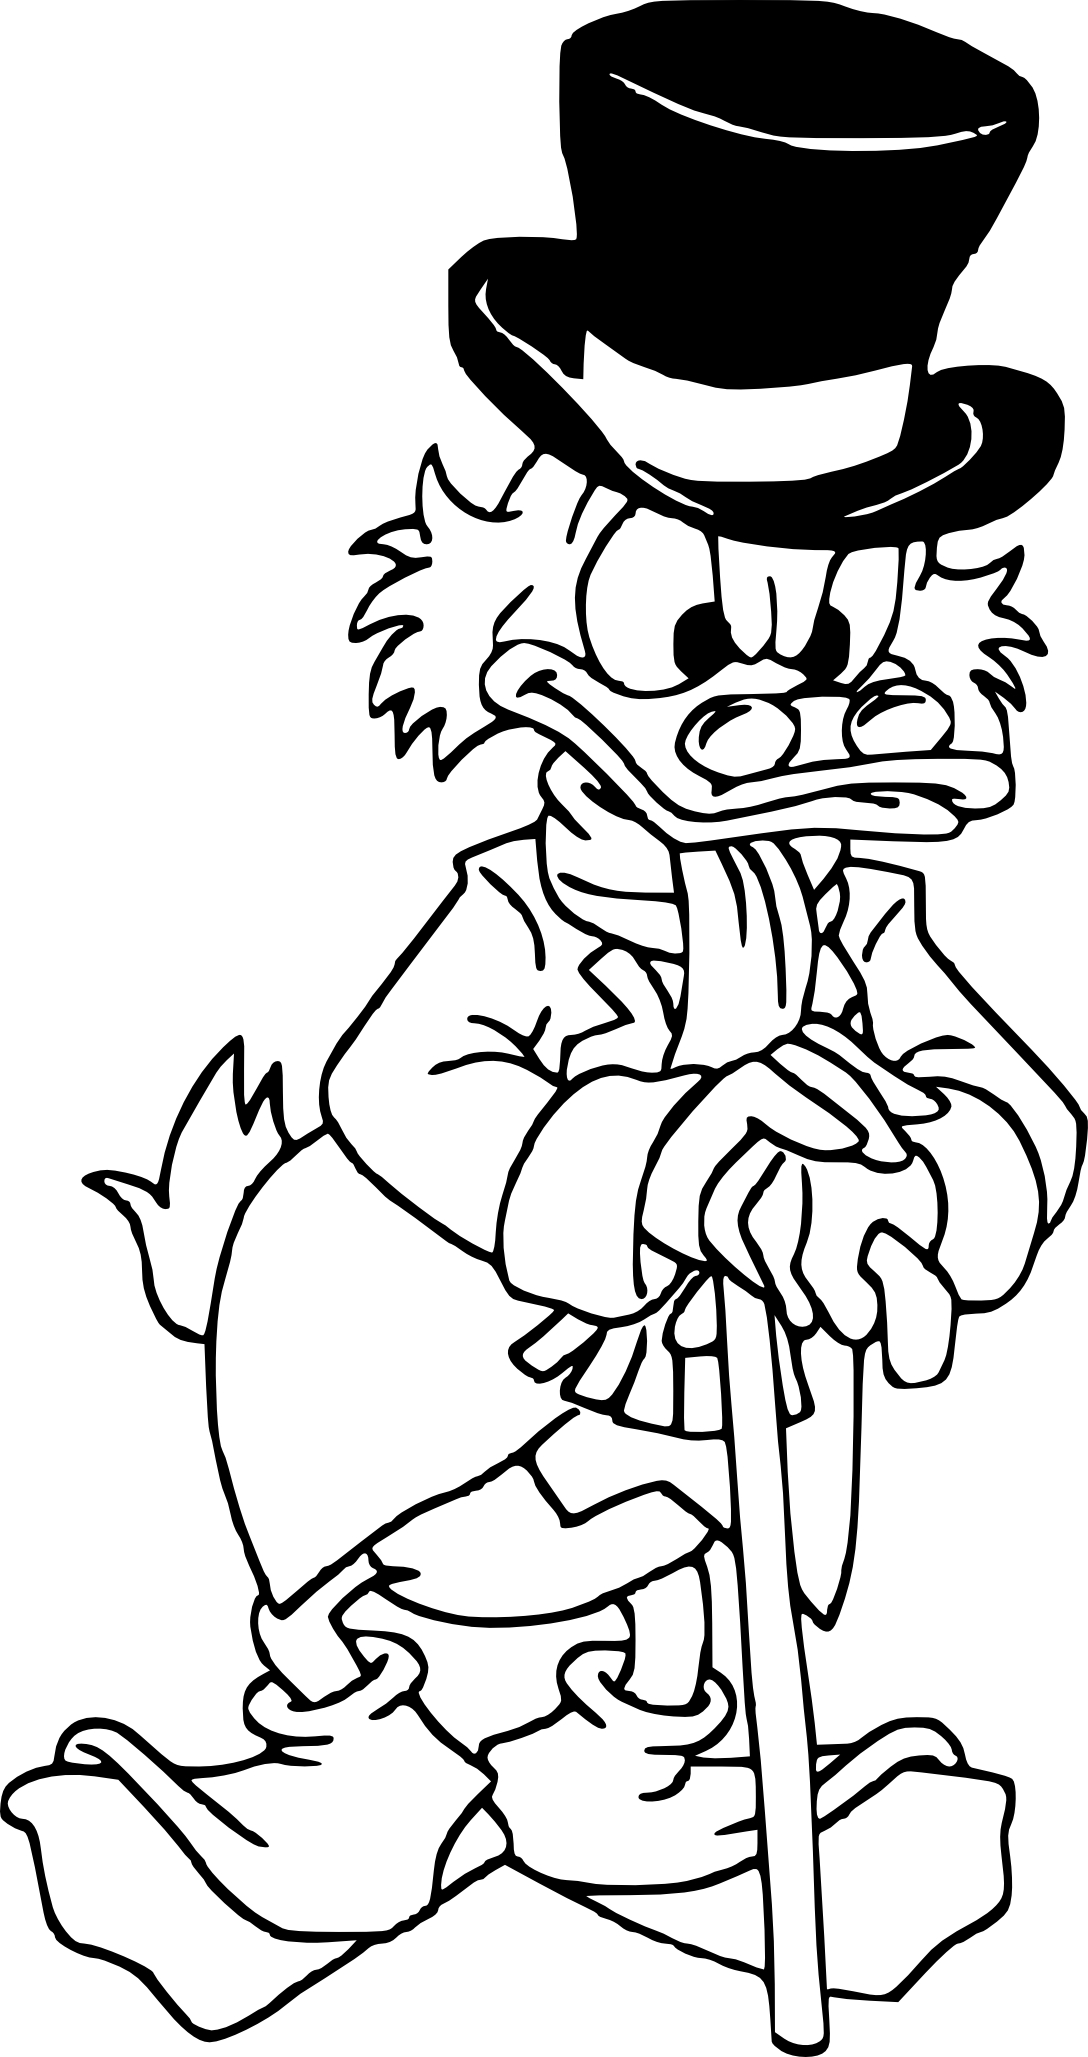 Balthazar Scrooge coloring page